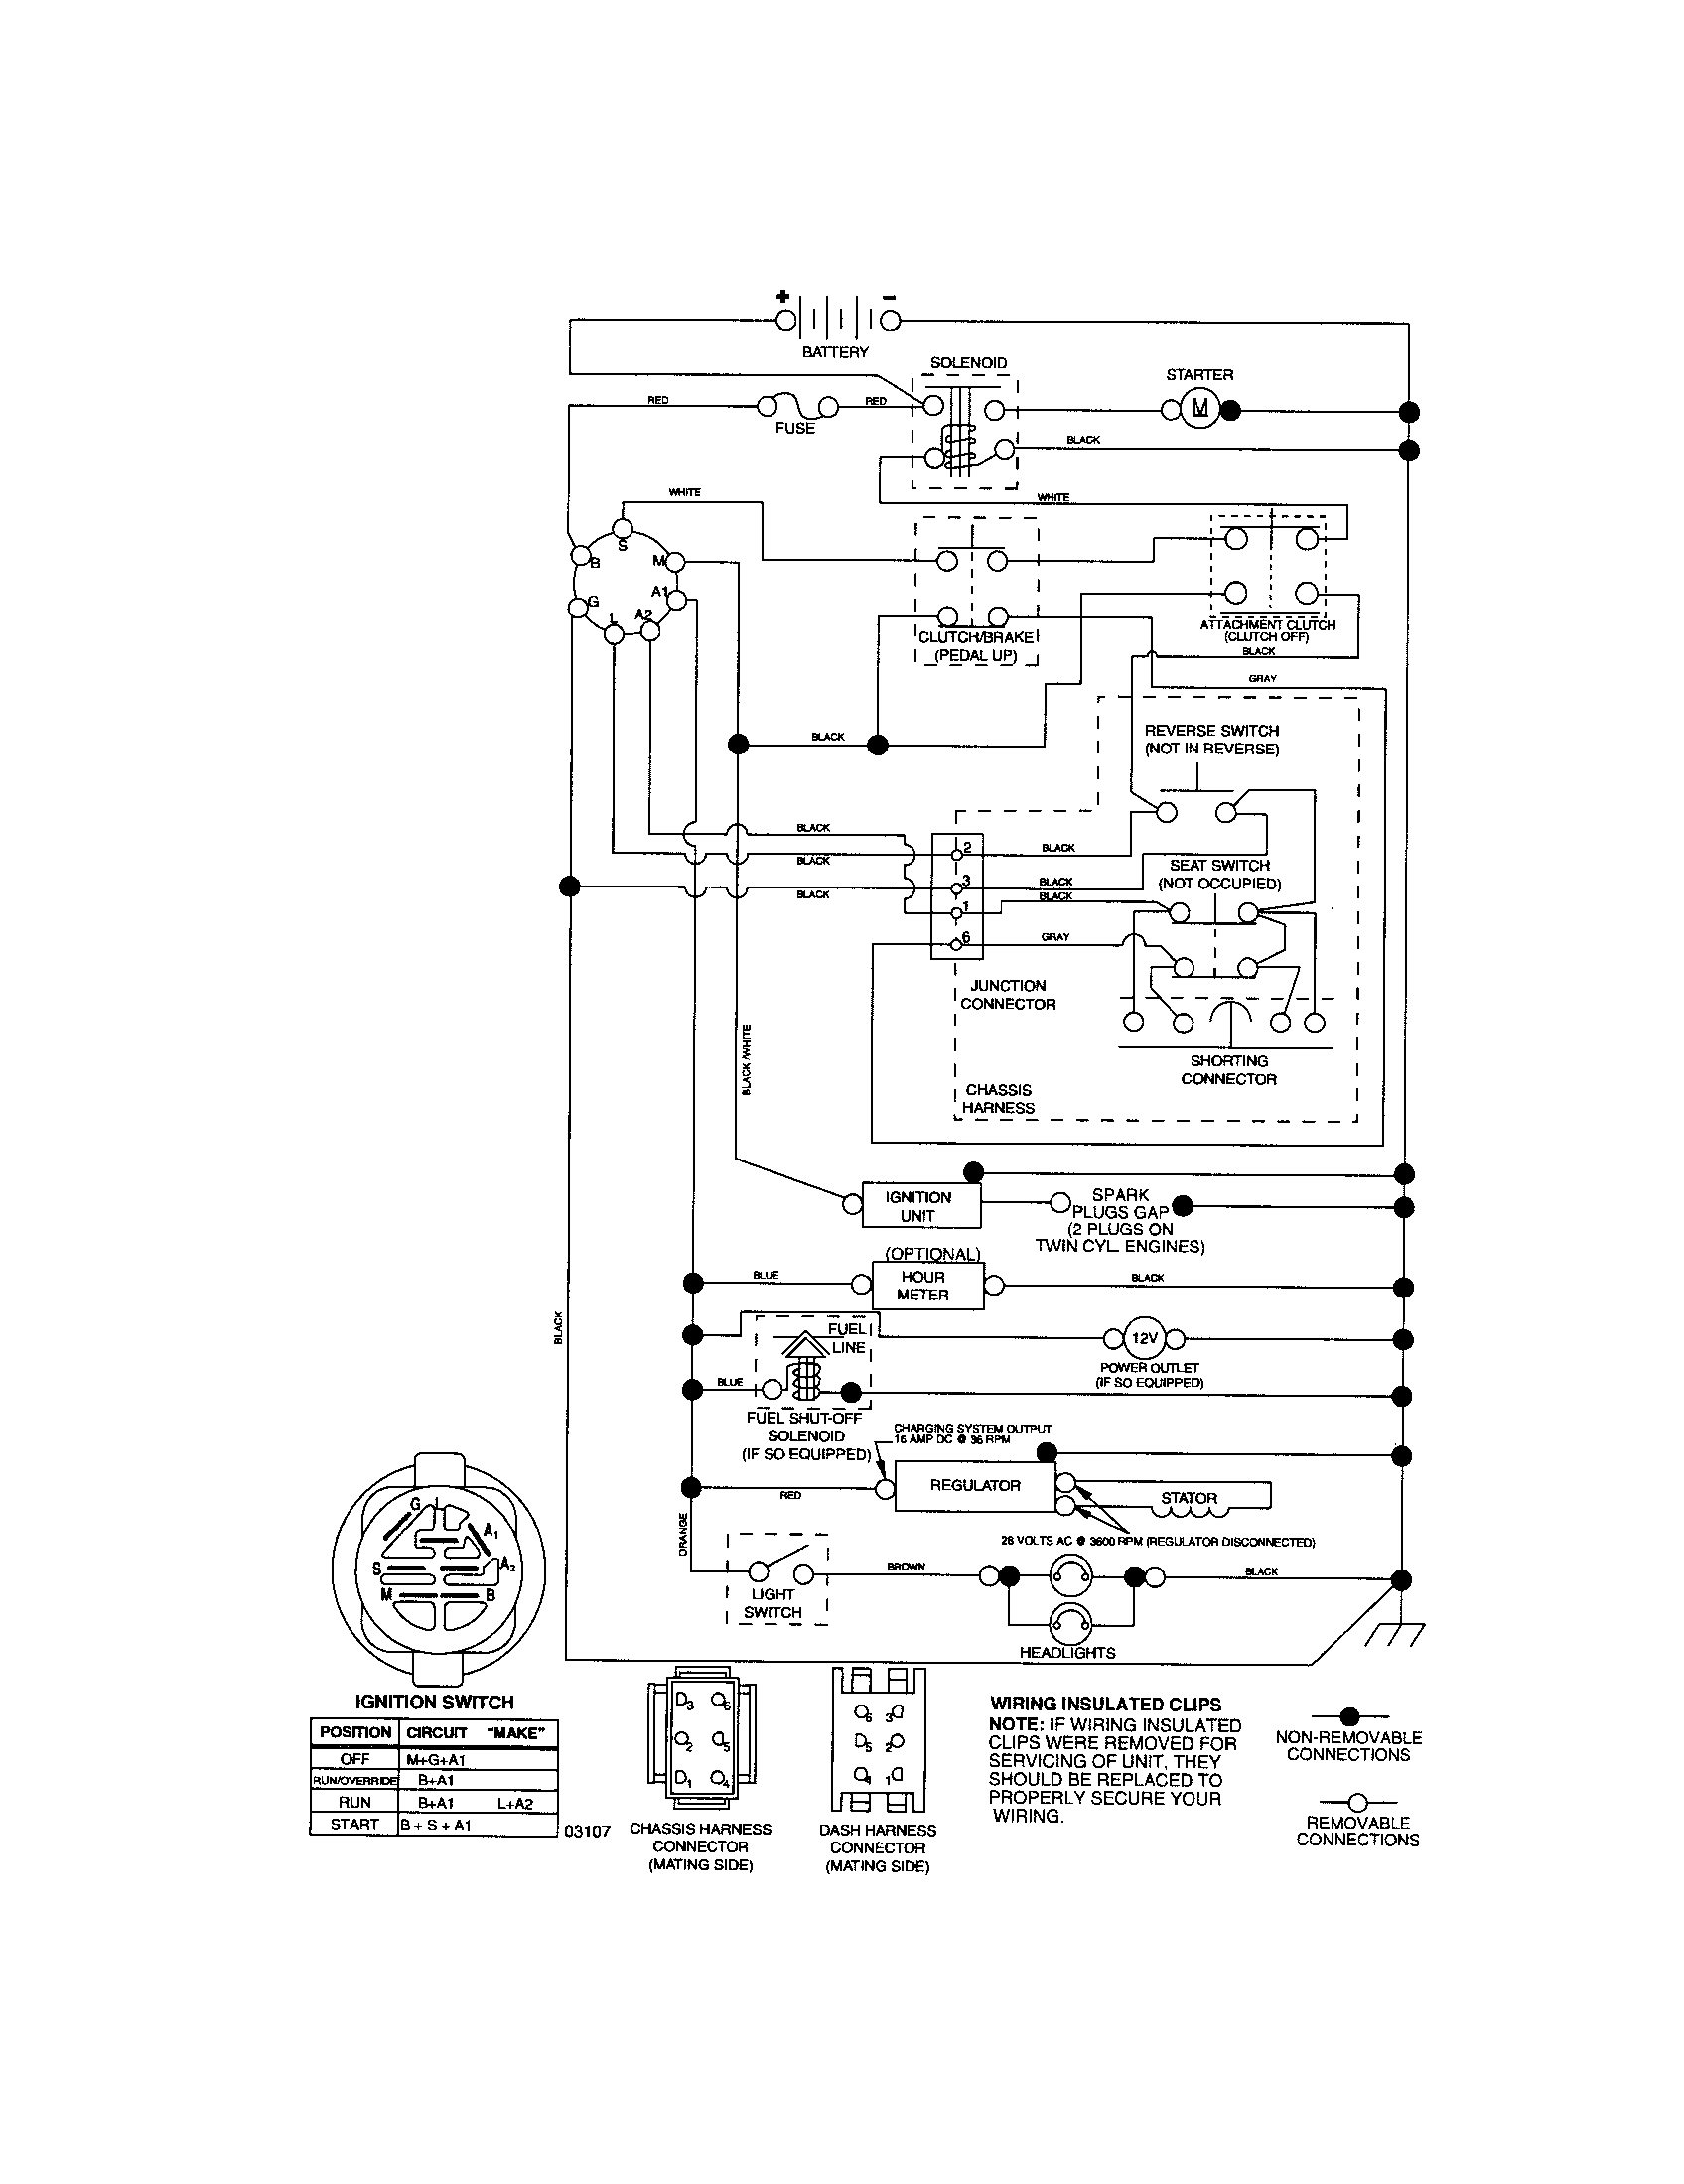 wiring diagram for the soleniod on a cub cadet 12.5hp kohler engine